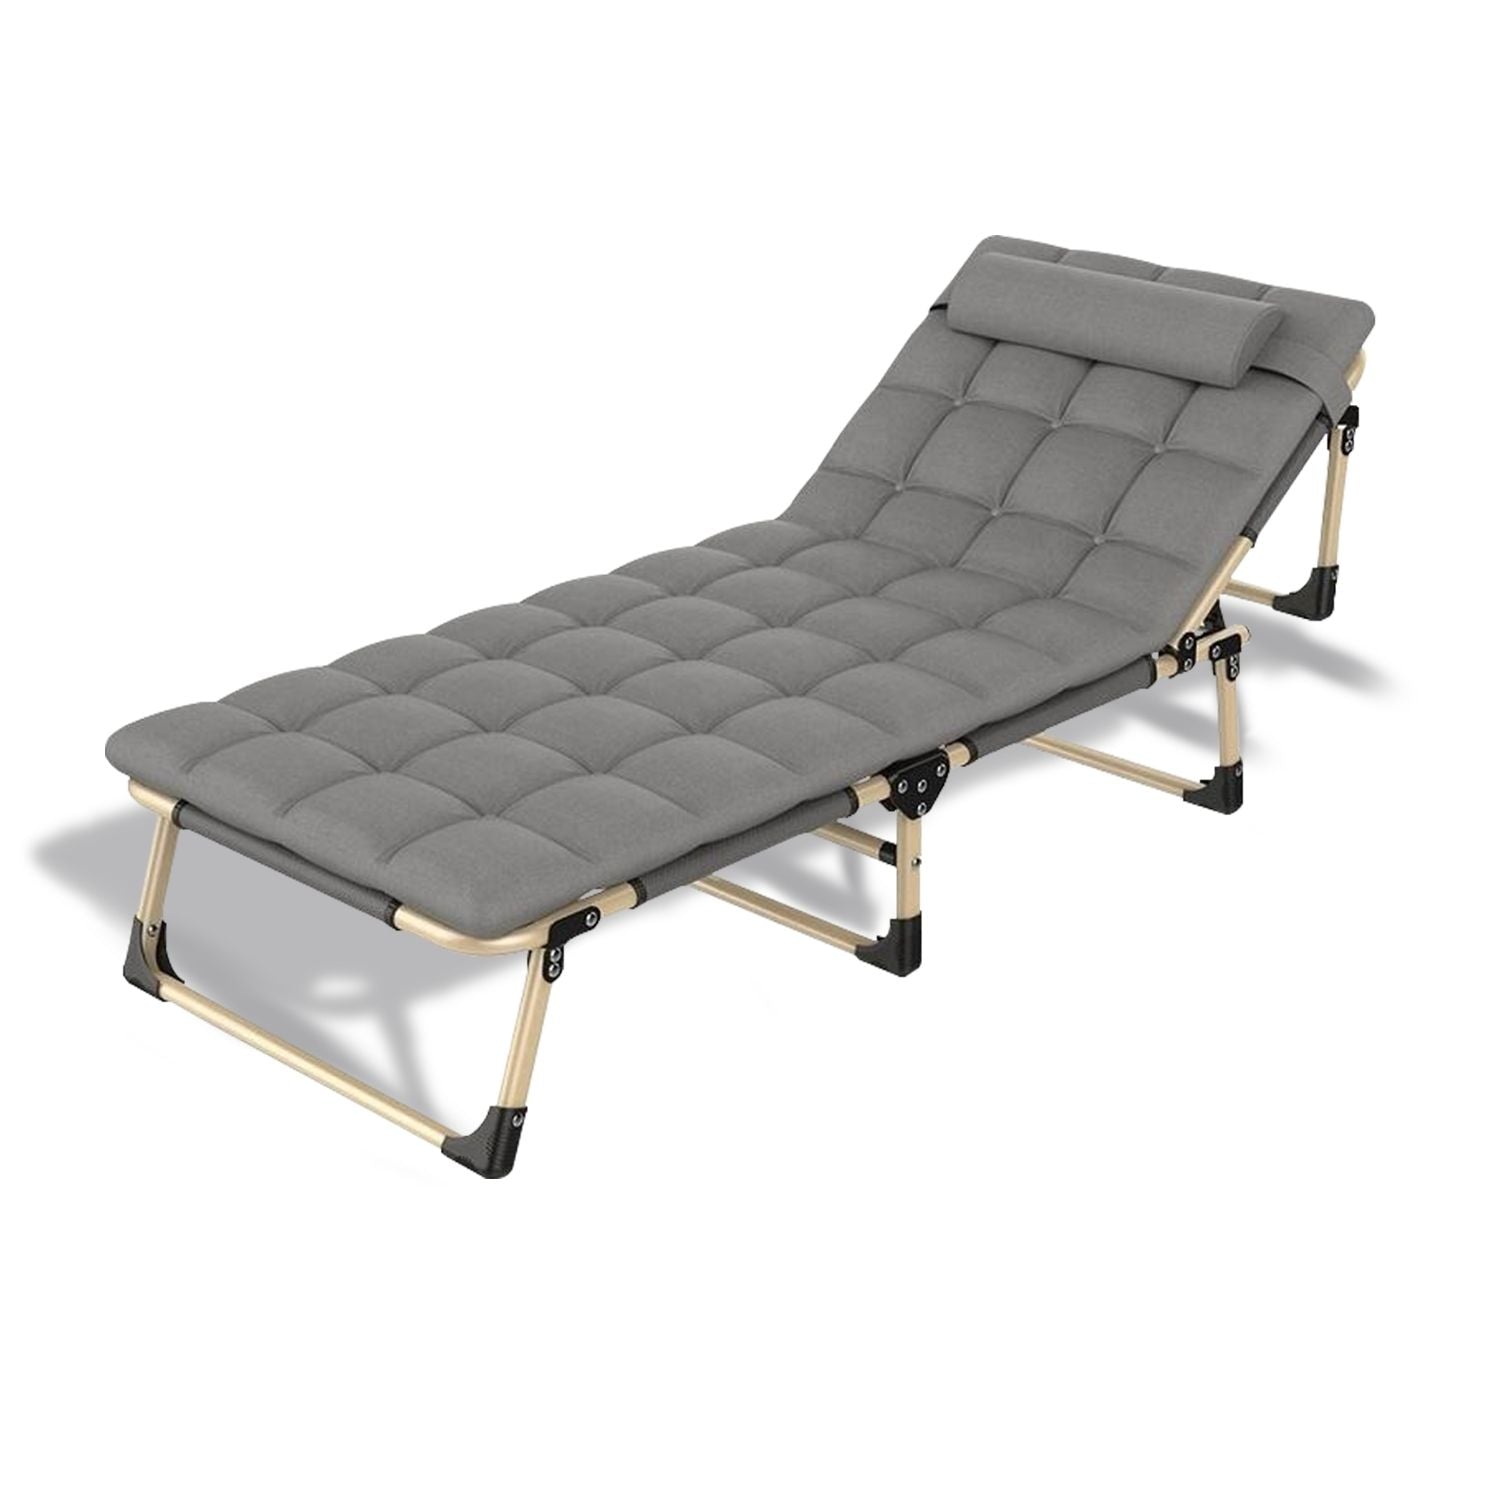 KILIROO Adjustable Portable Folding Bed with Mattress and Headrest (Grey)